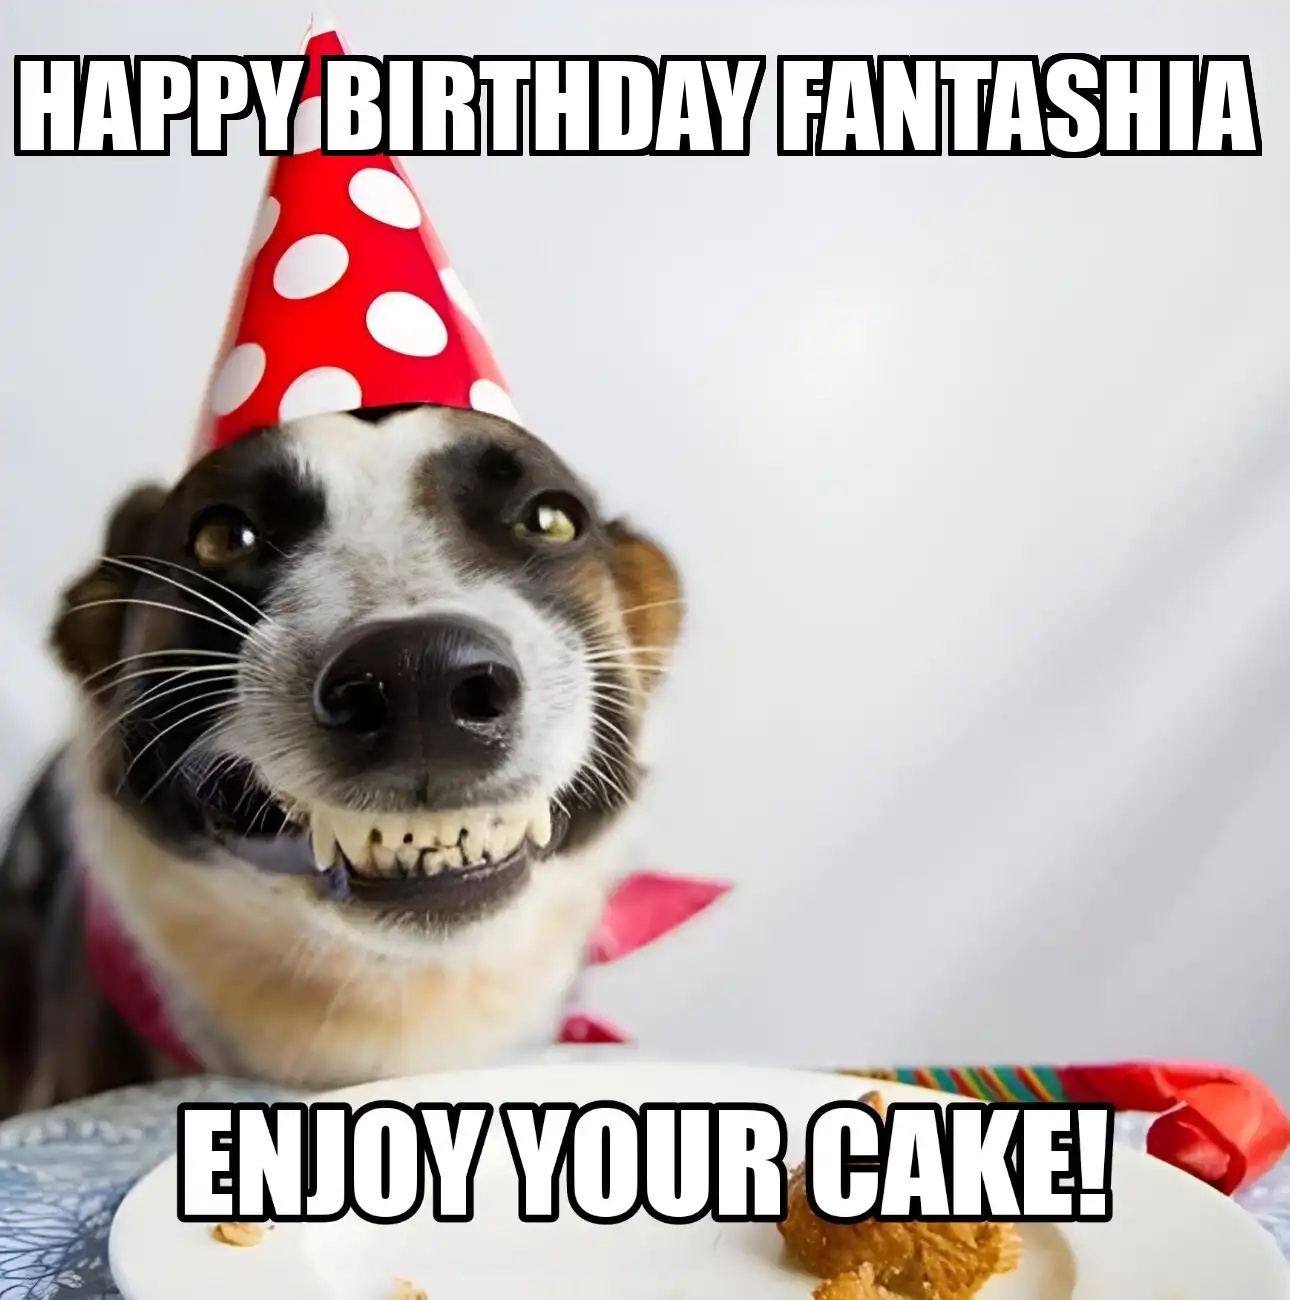 Happy Birthday Fantashia Enjoy Your Cake Dog Meme